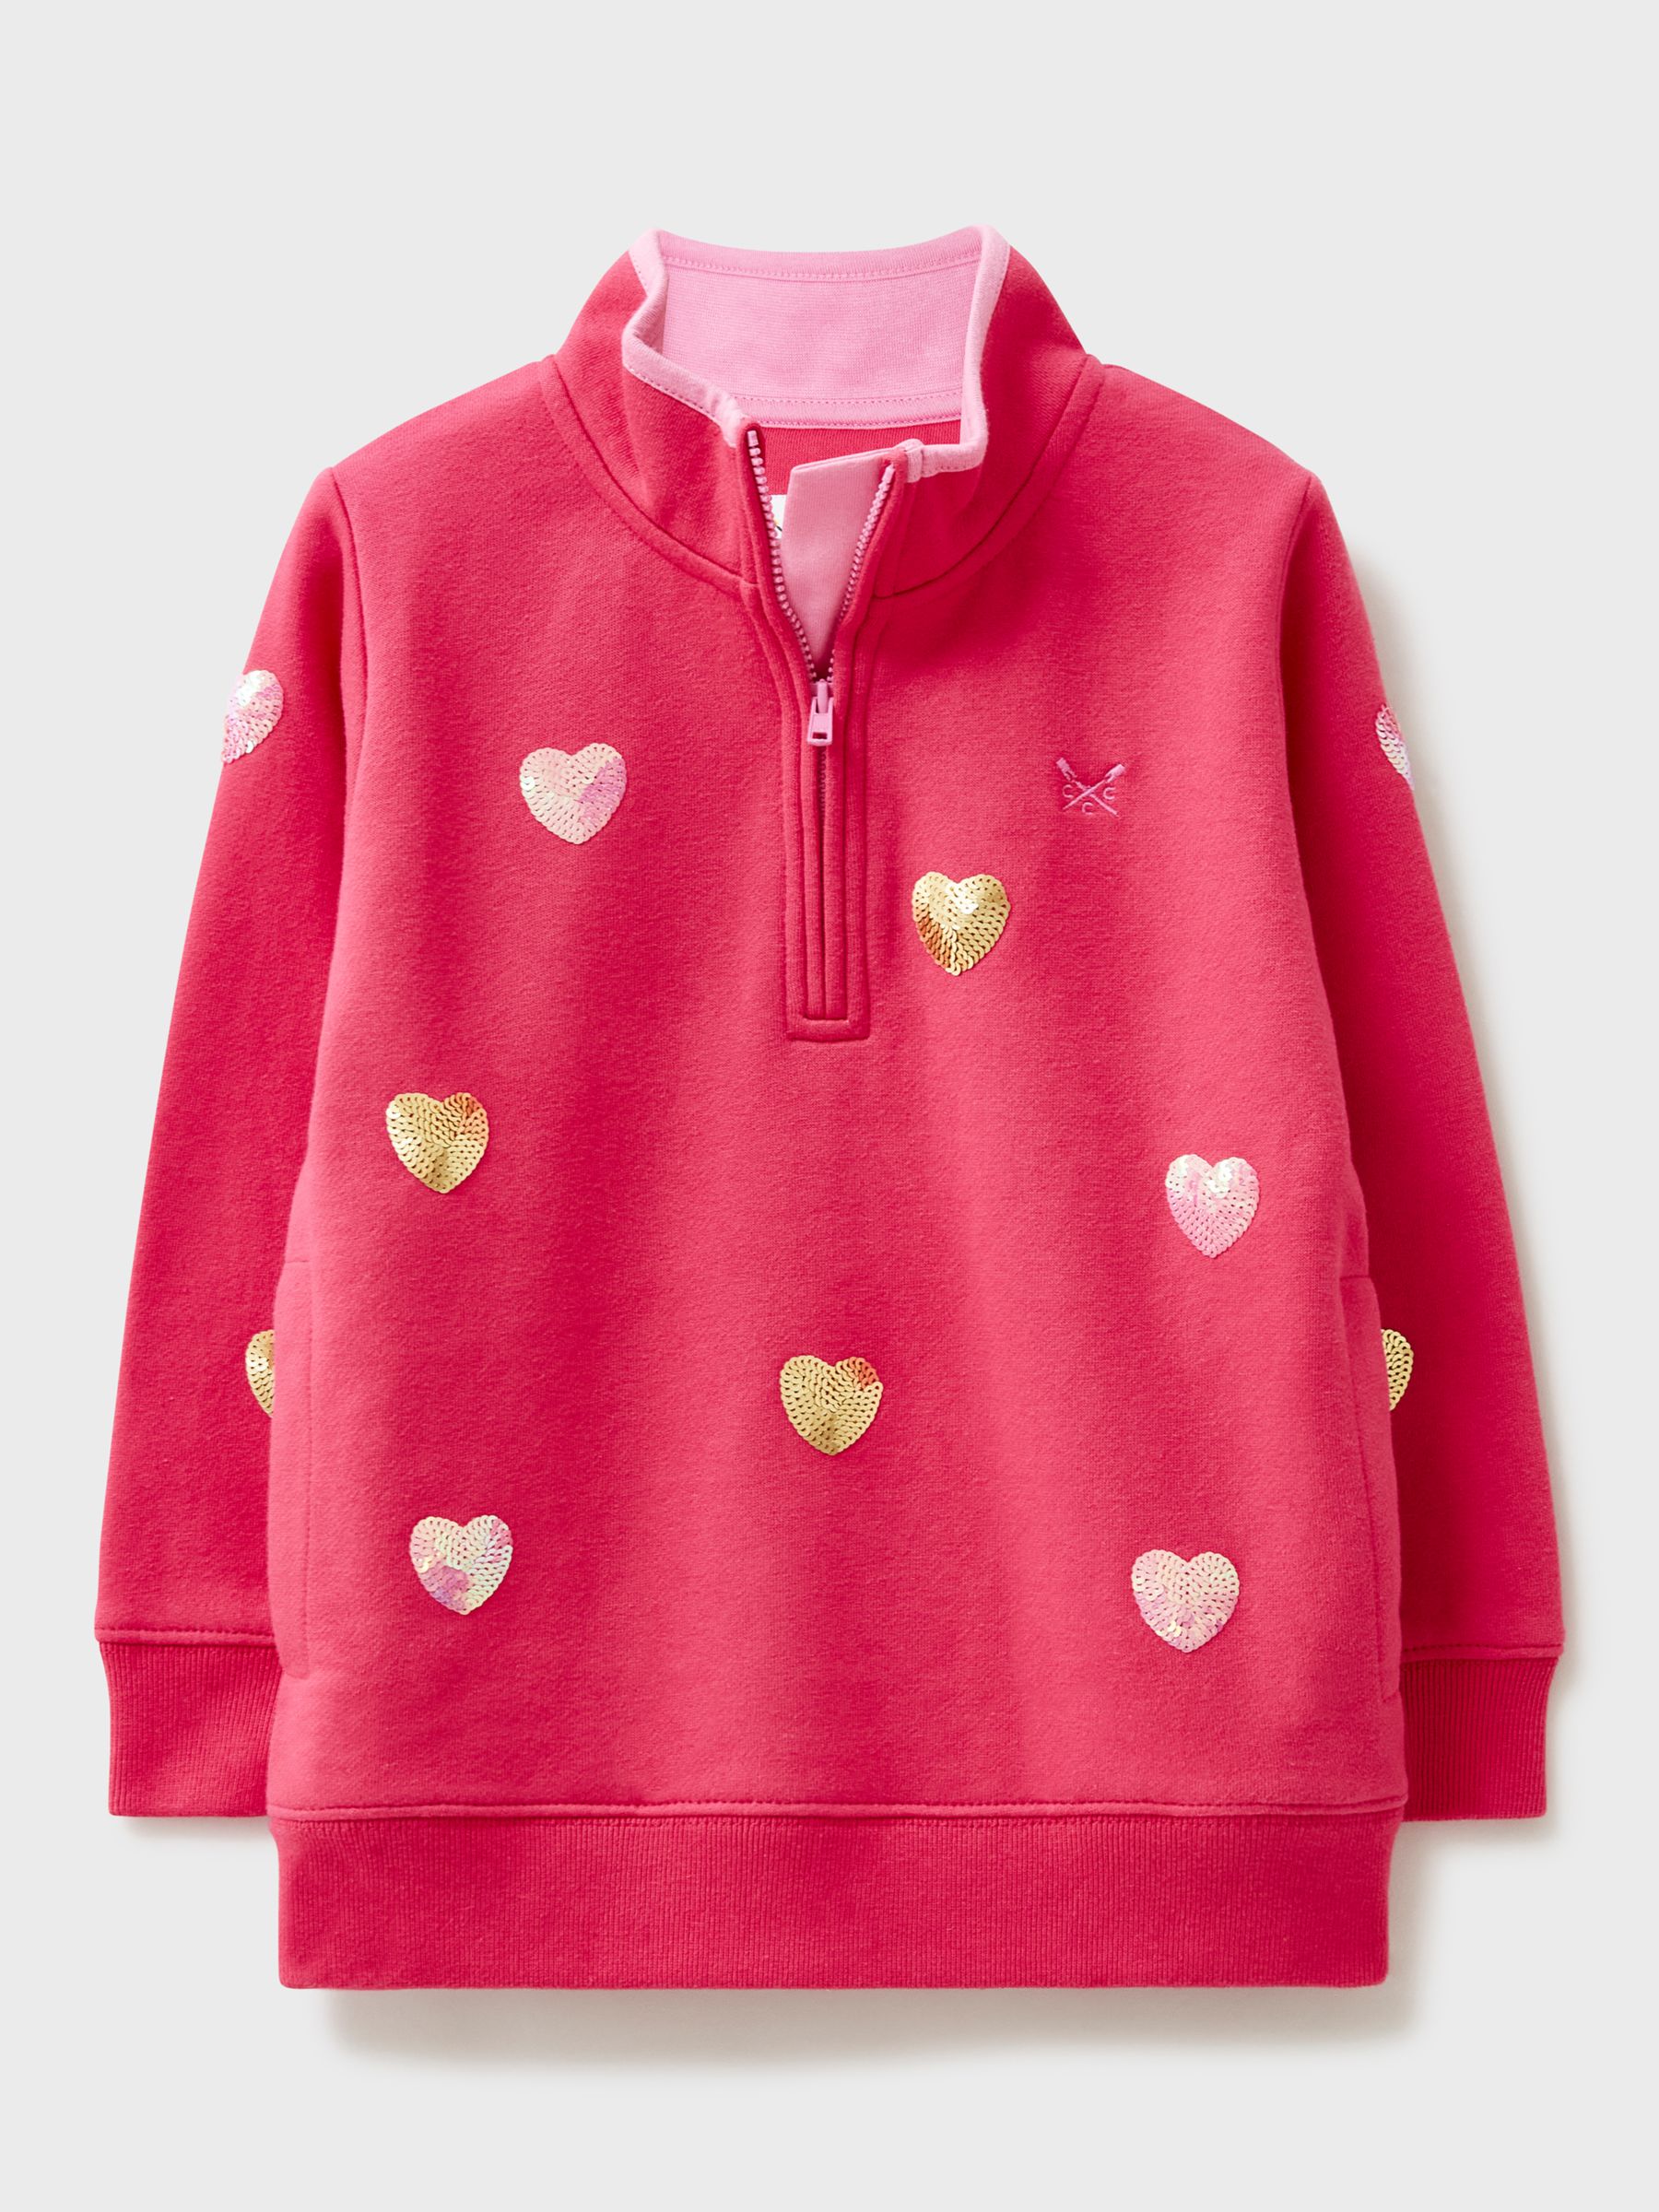 Buy Crew Clothing Kids' Sequin Heart Cotton Blend Sweatshirt, Bright Pink Online at johnlewis.com